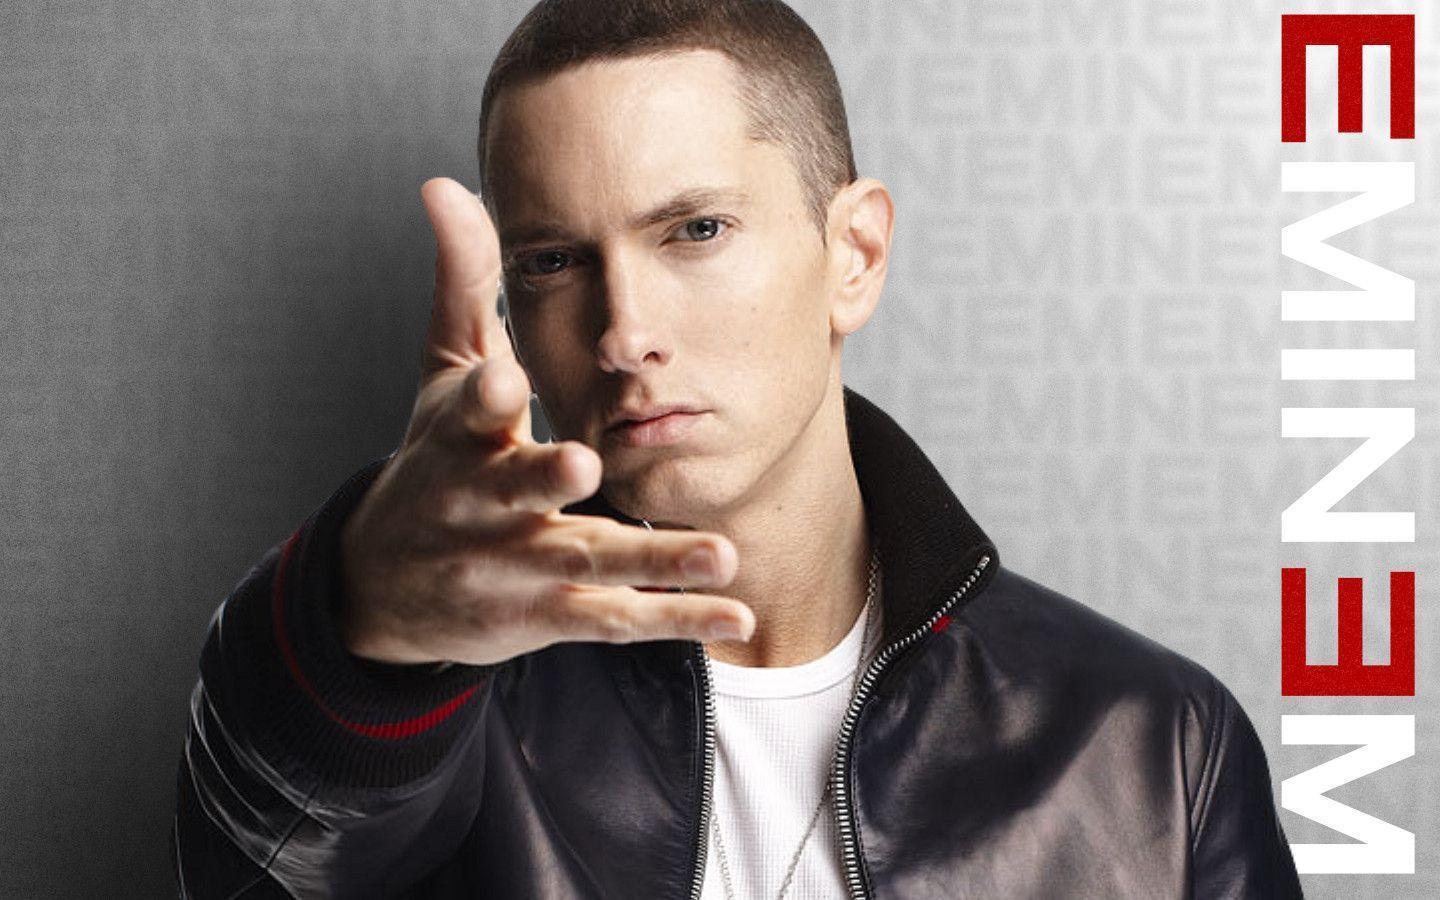 Gadgets Info Available: Eminem Wallpaper For Facebook